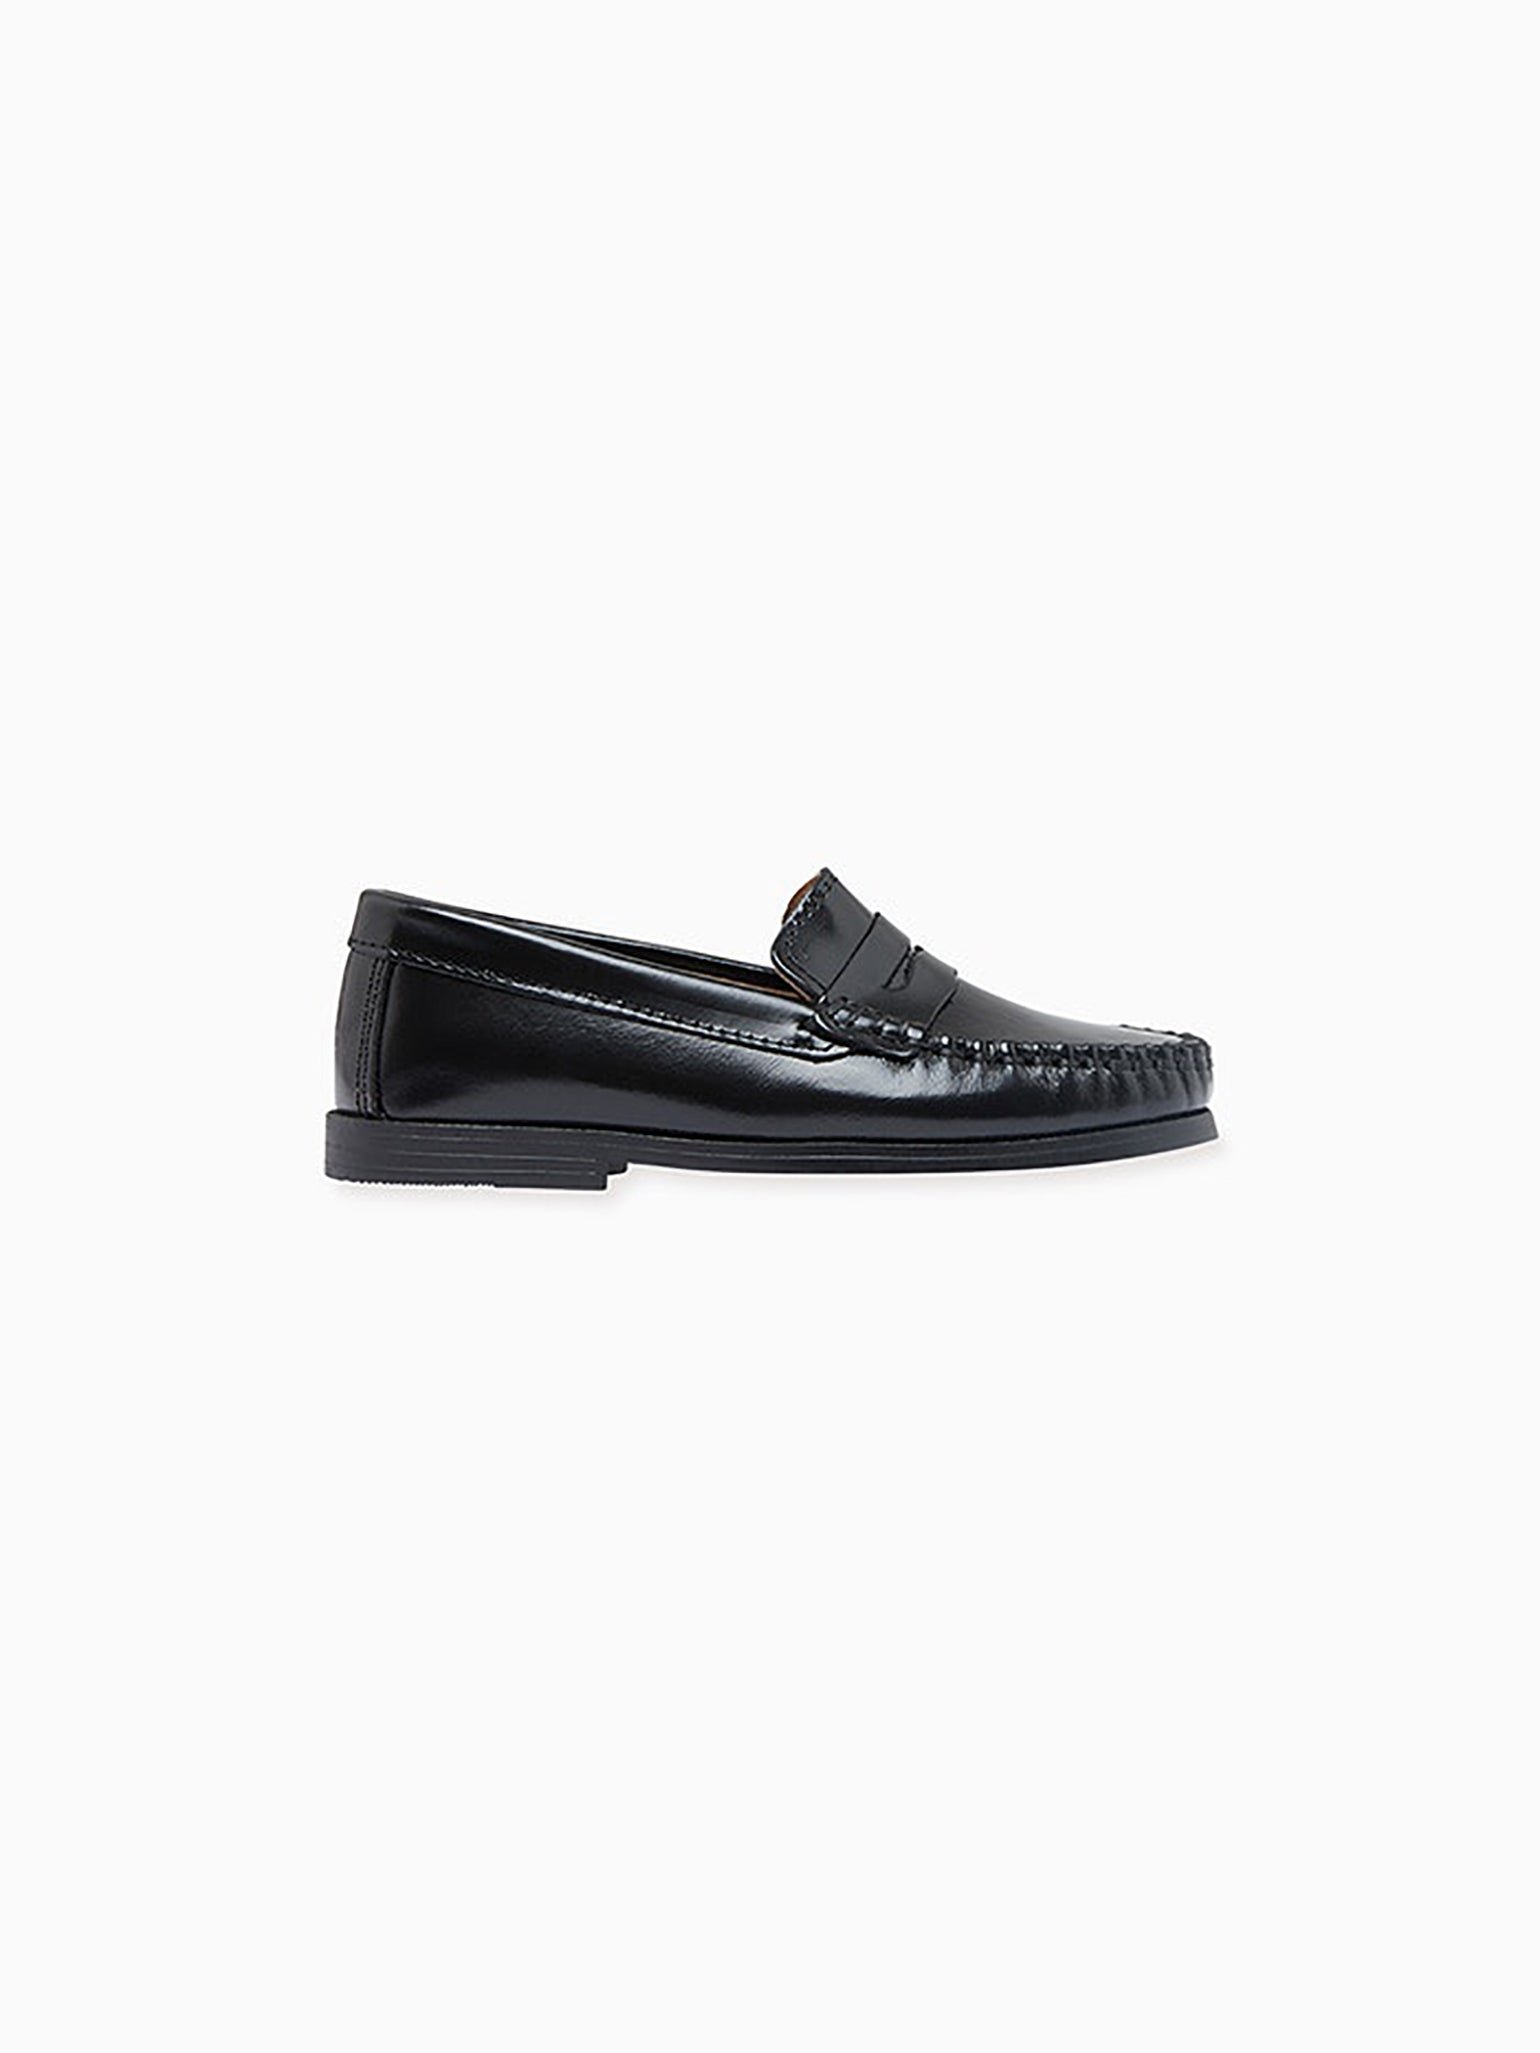 Black Leather Castellanos Loafer Shoes